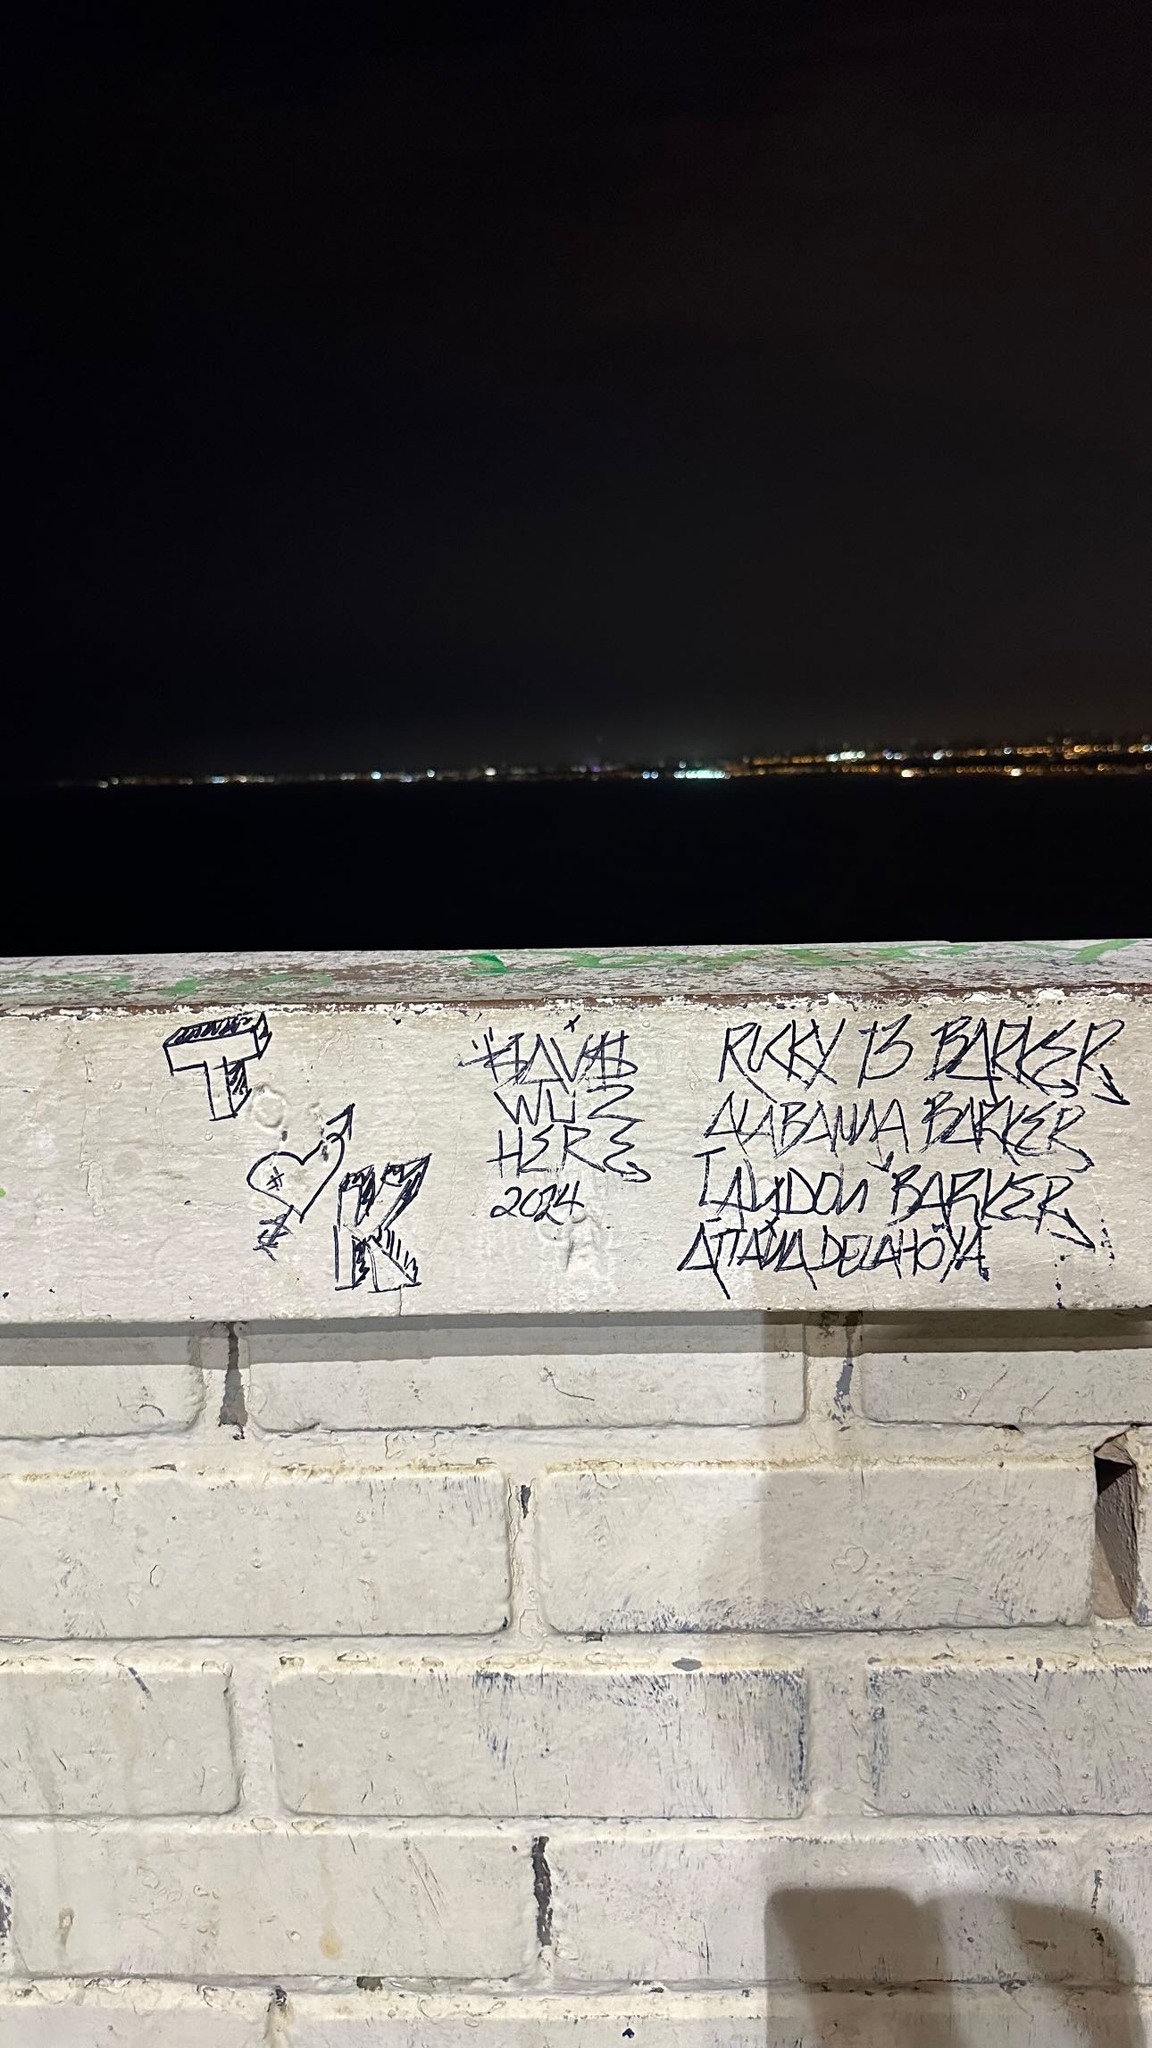 Travis shared a photo of his graffiti art, which included his children's names: Rocky Barker, Alabama Barker, Landon Barker, and Atiana De La Hoya